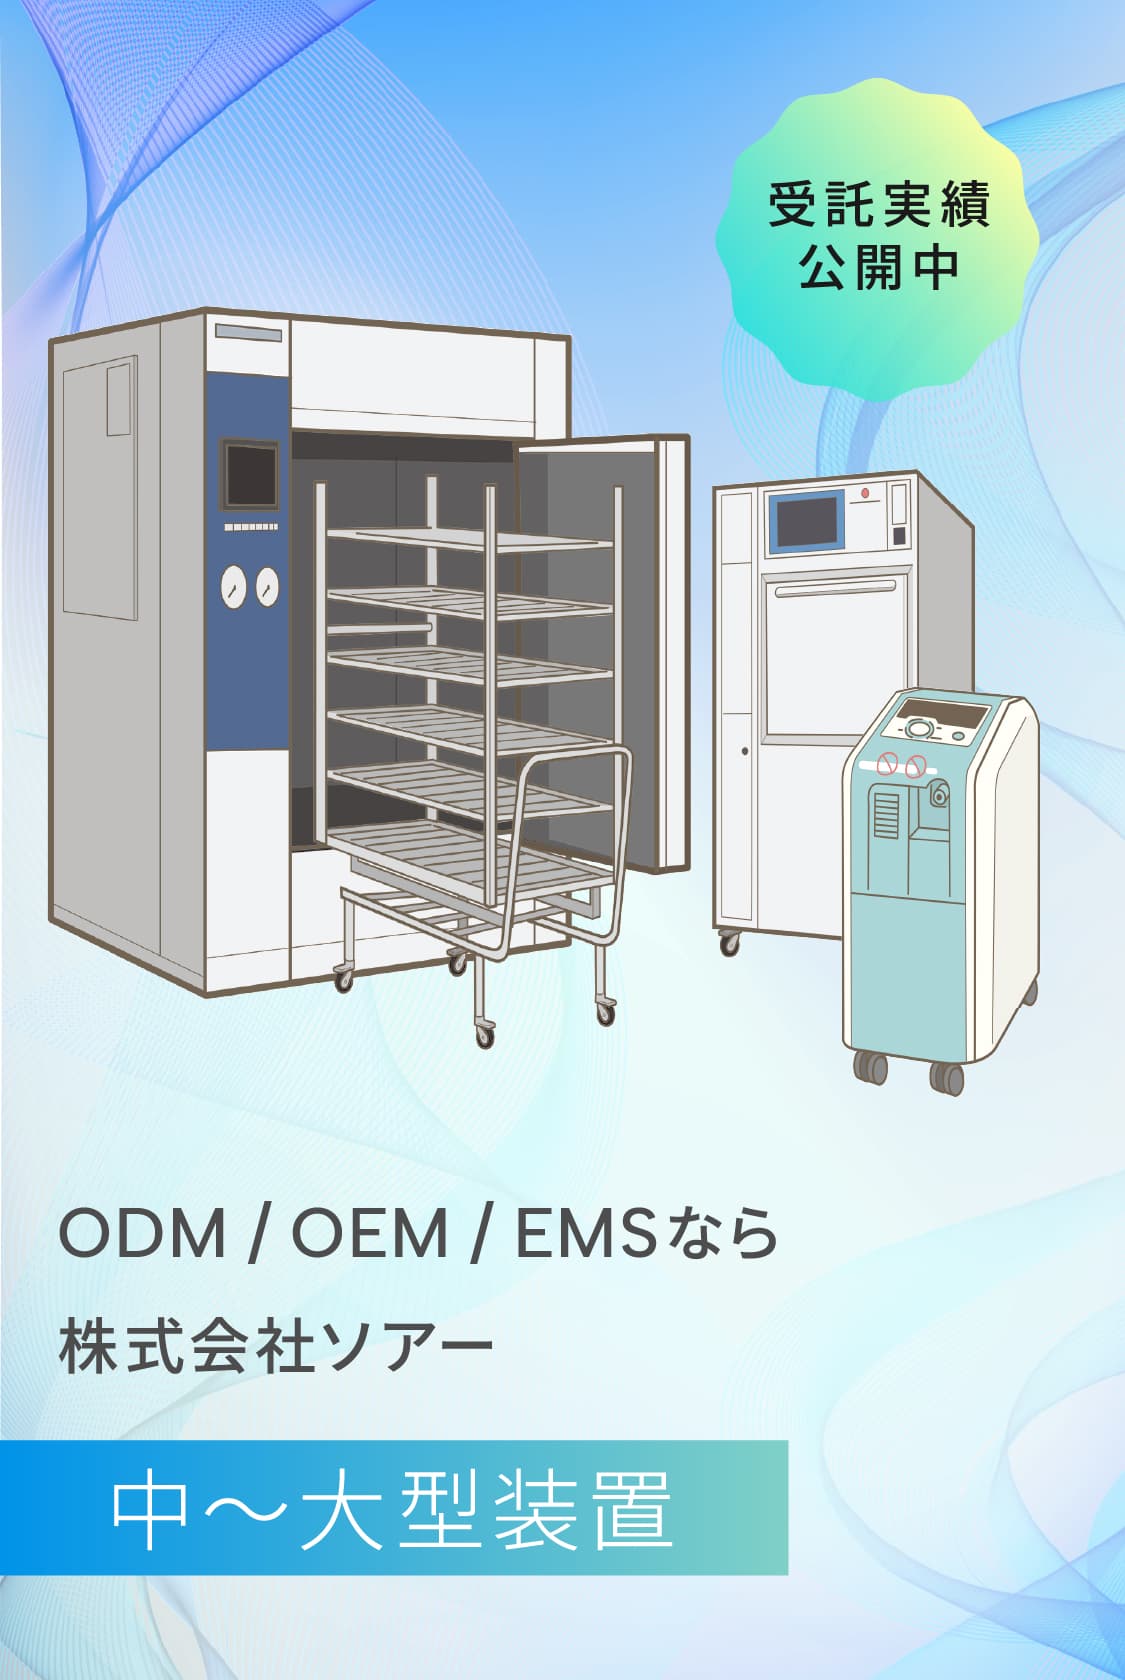 ODM/OEM/EMS中〜大型装置